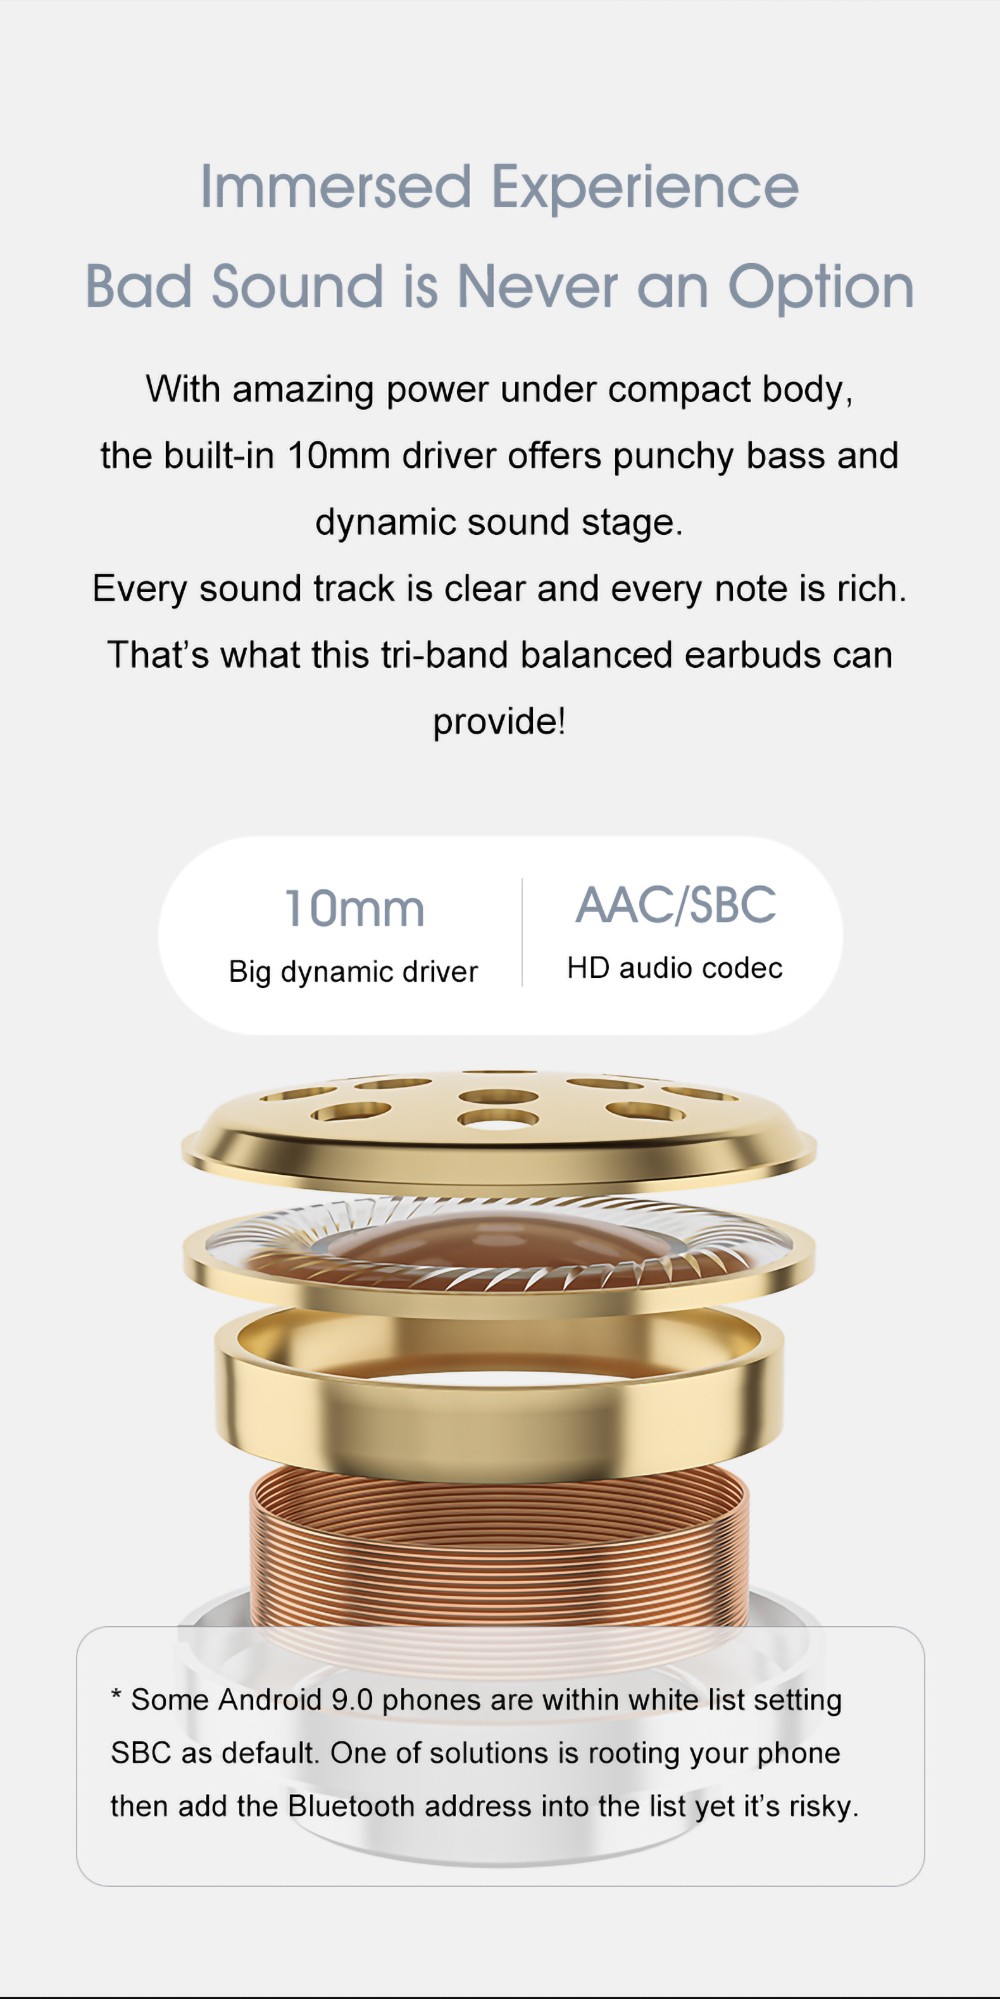 QCY HT03 Bluetooth 5.1 TWS หูฟังไร้สายตัดเสียงรบกวนที่ใช้งาน